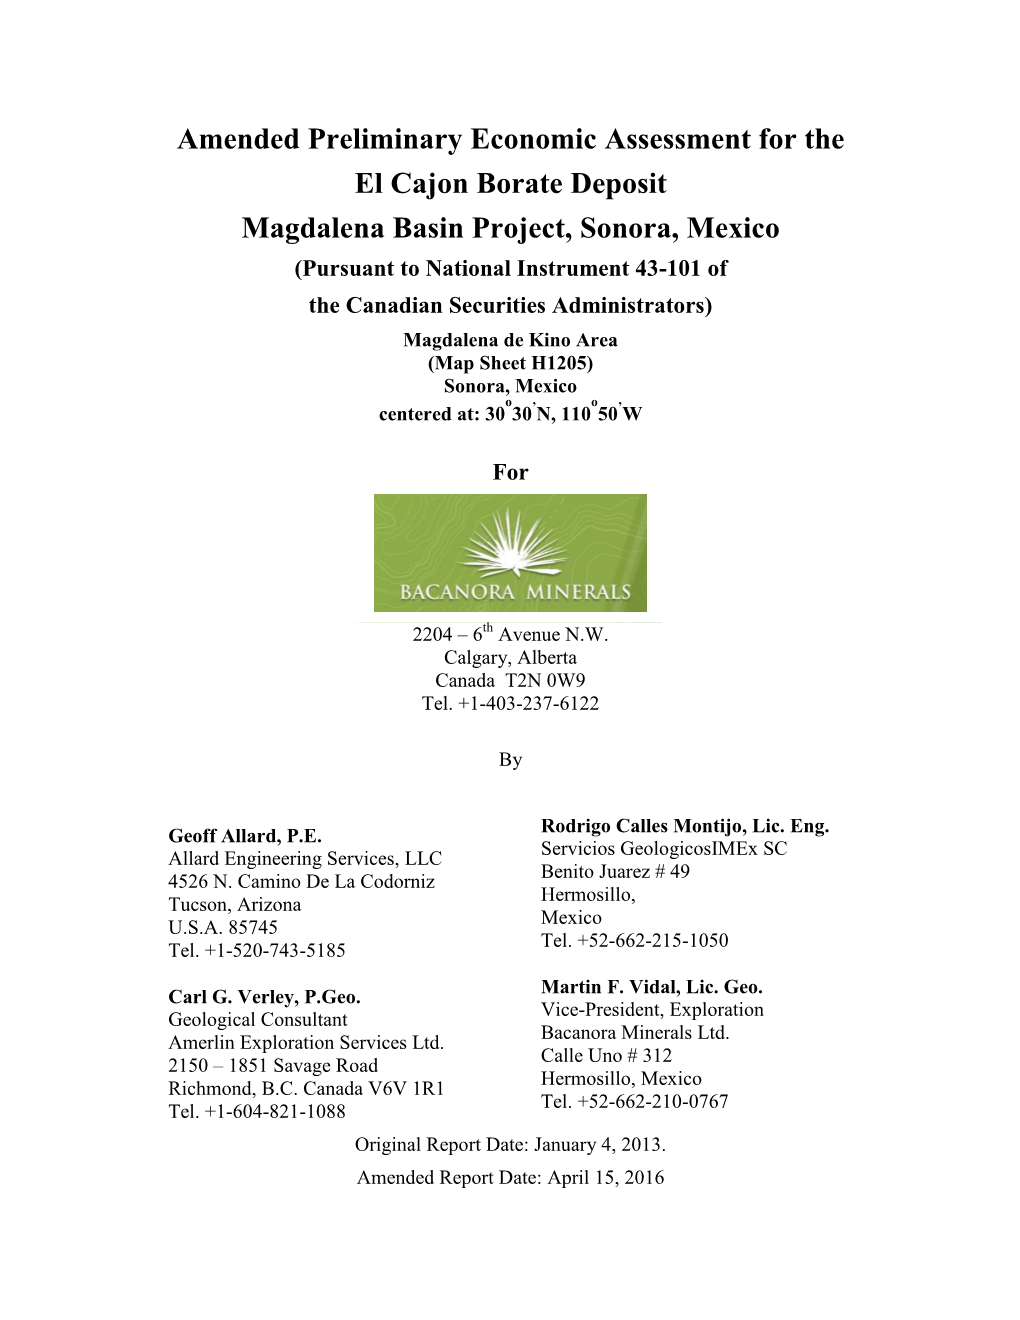 Amended Preliminary Economic Assessment for the El Cajon Borate